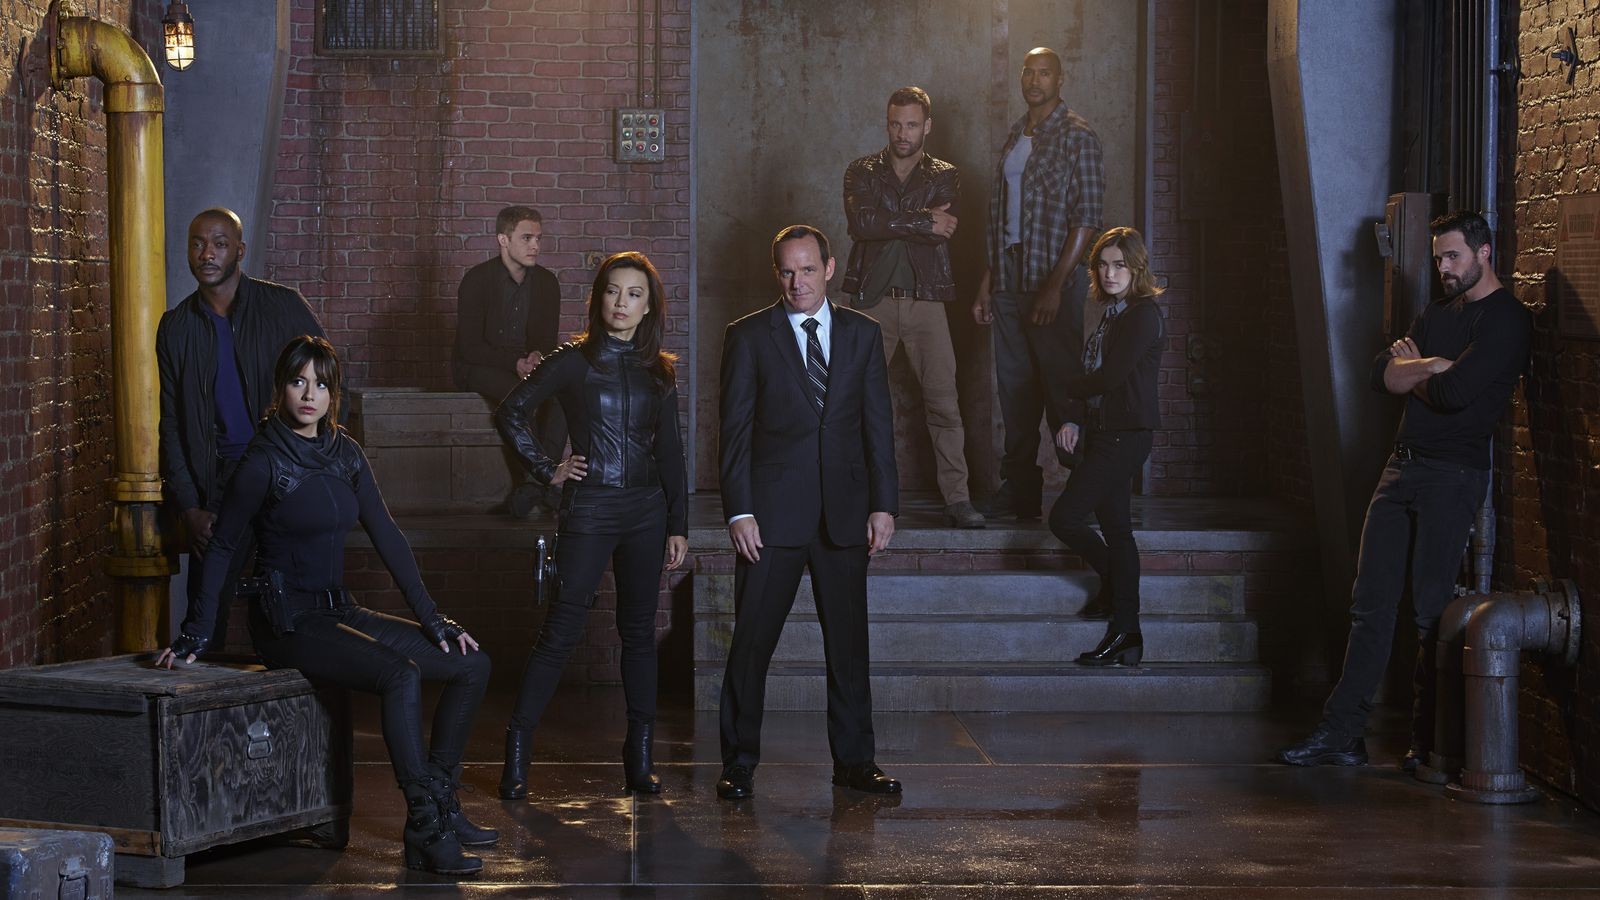 Agents of S.H.I.E.L.D. [Credit: Marvel Television]